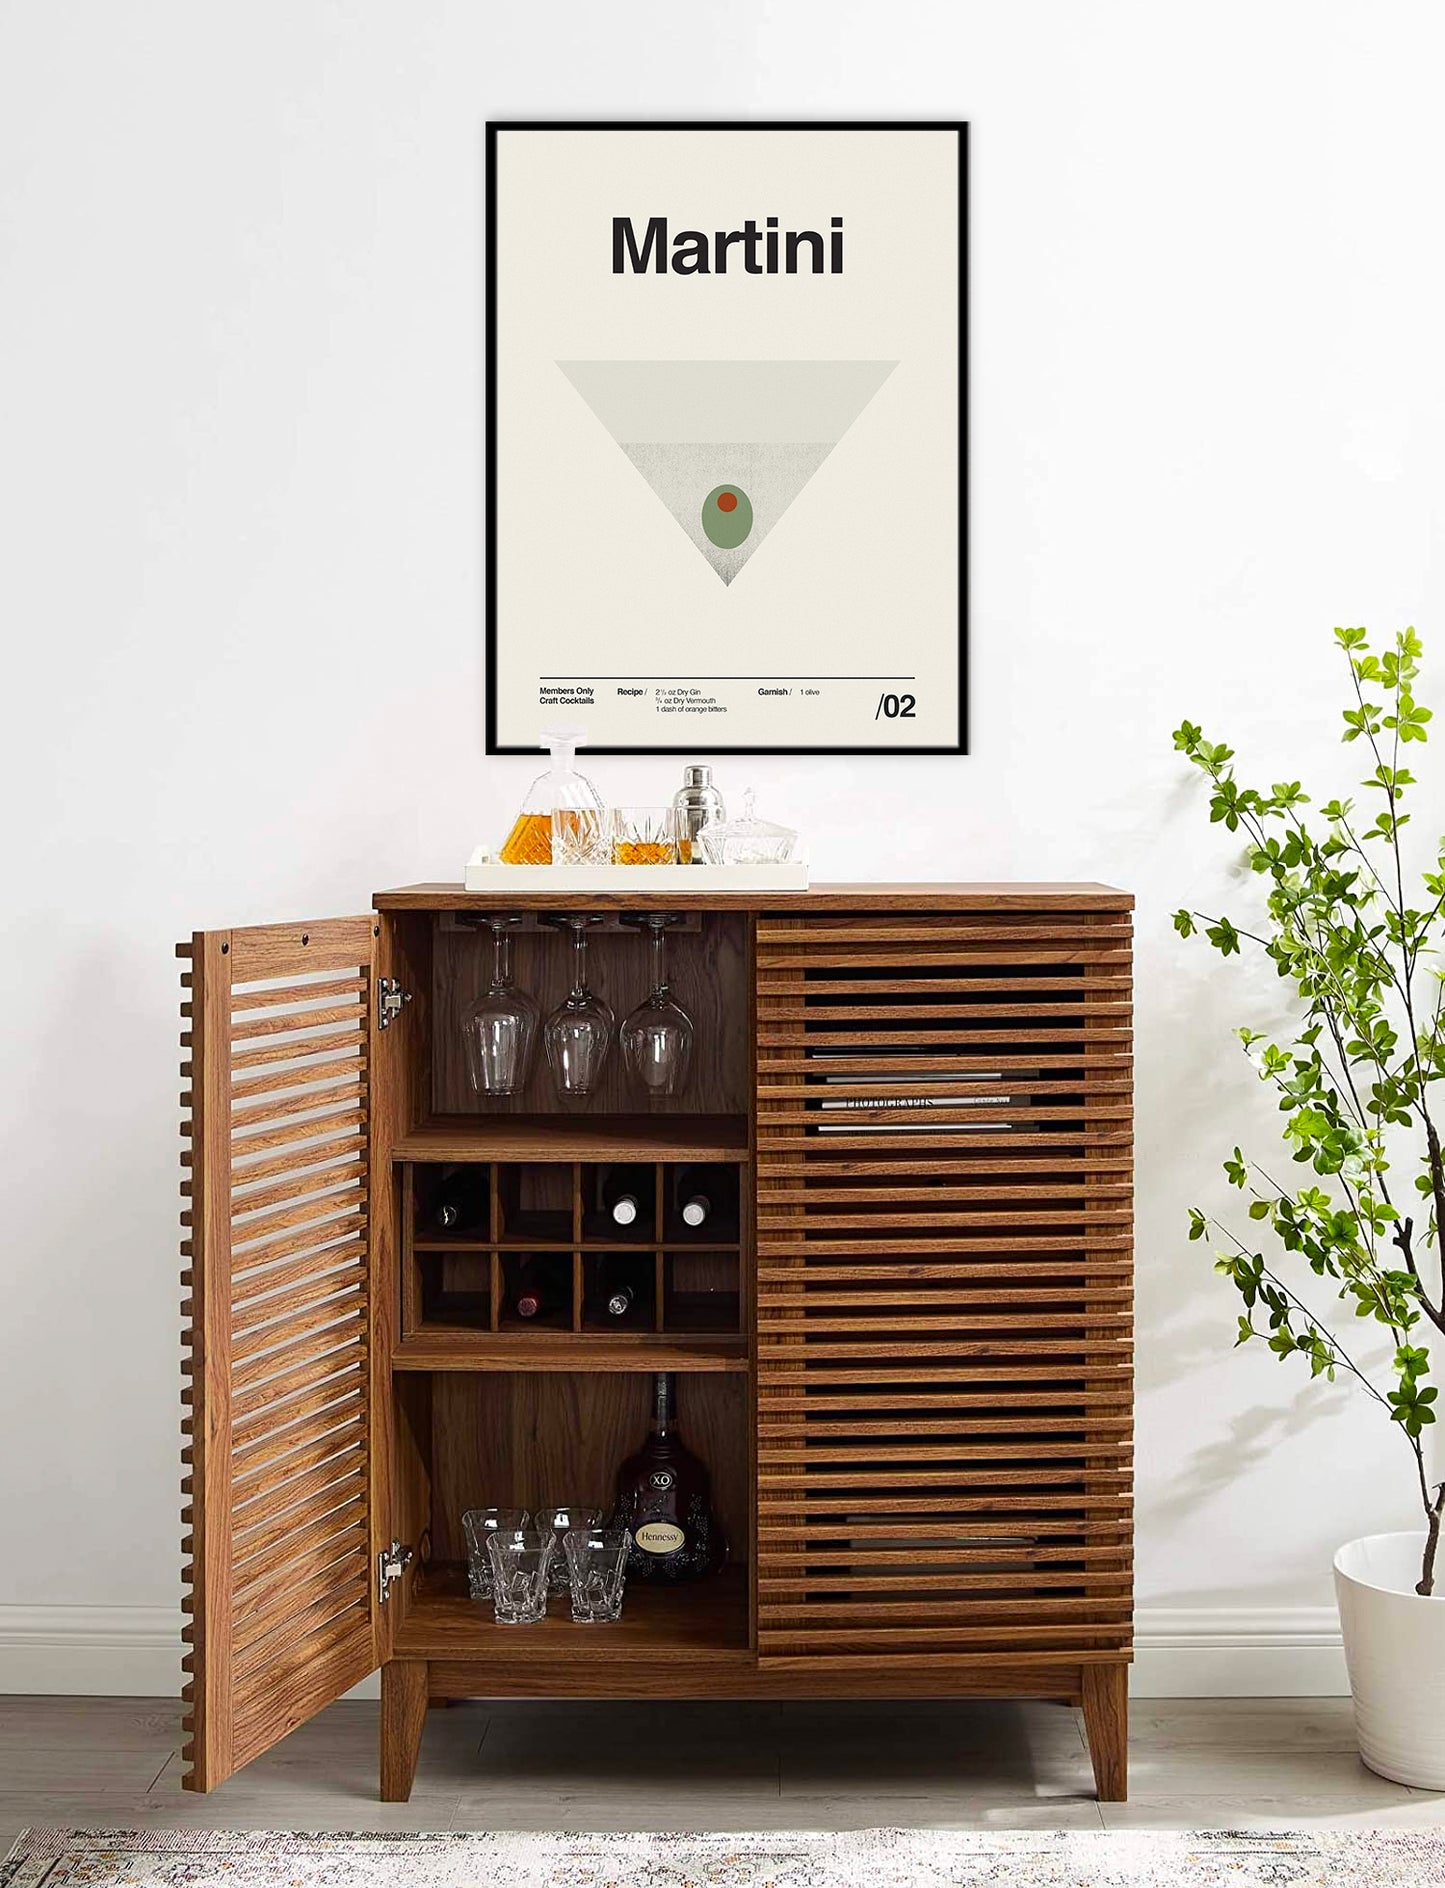 Martini - Cocktail